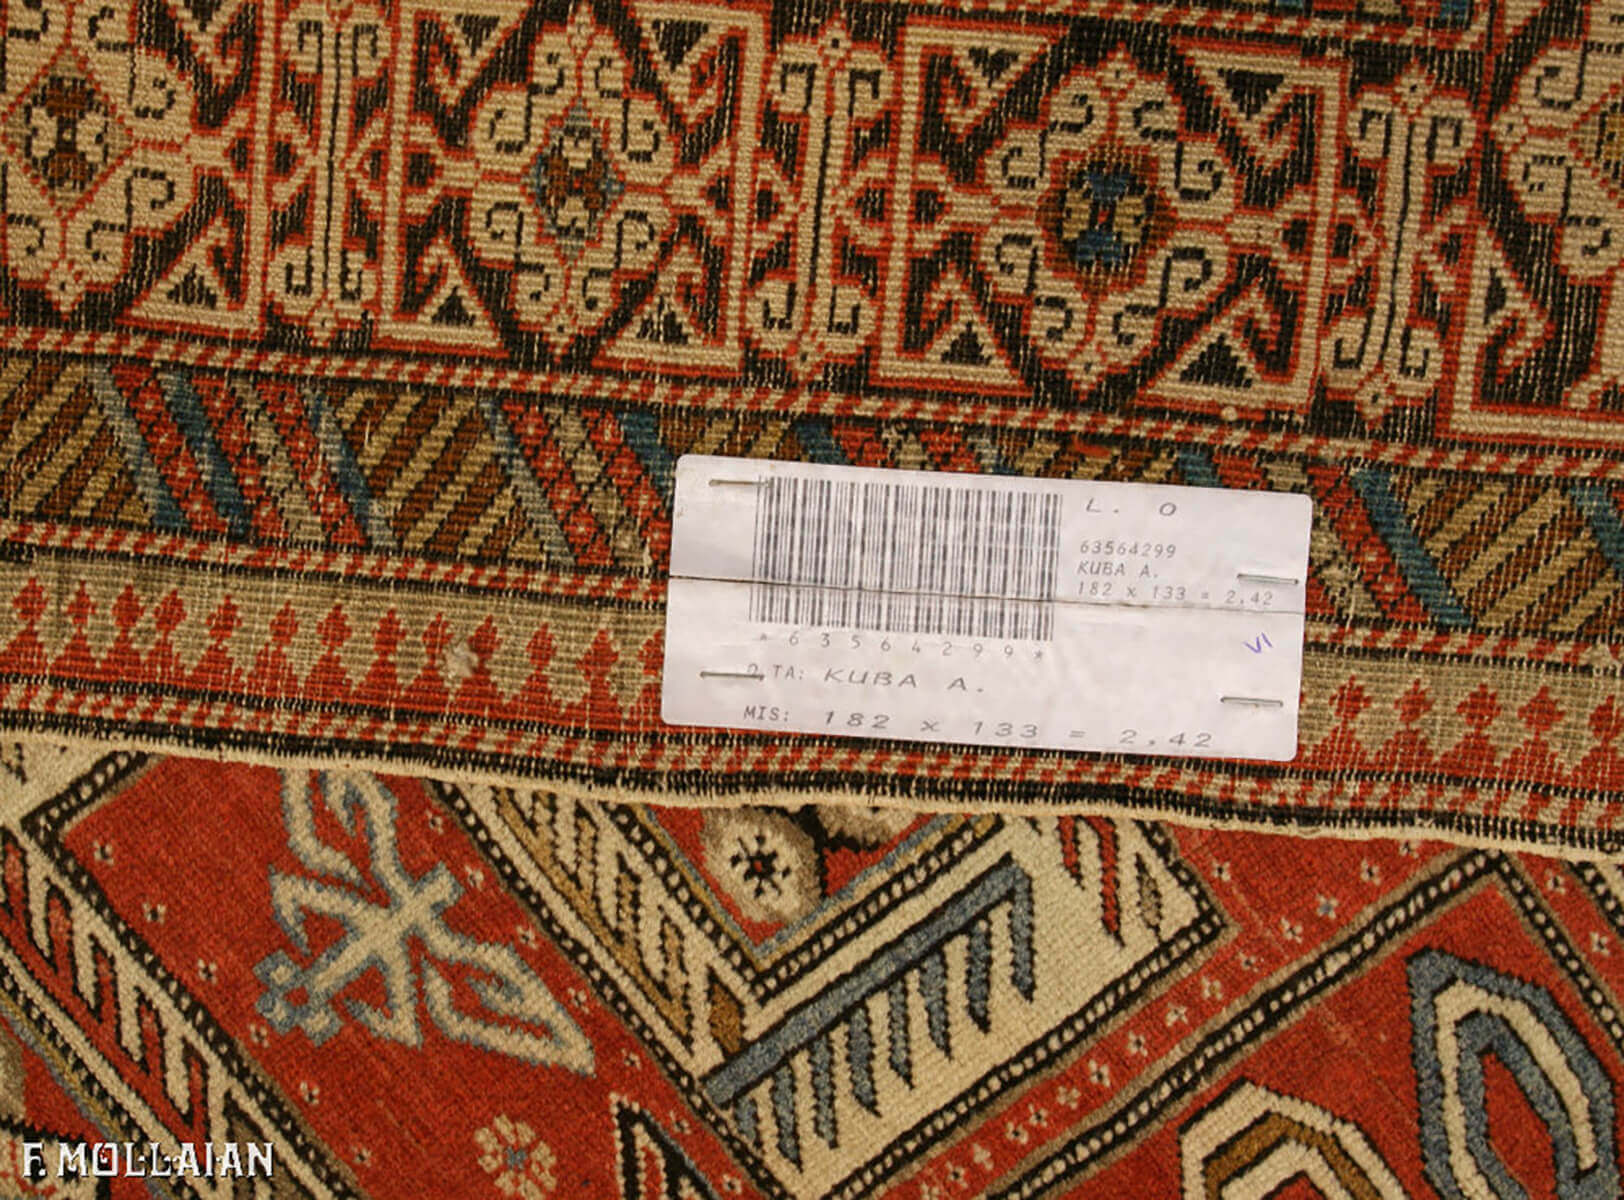 Antique Caucasian Kuba (Quba) Rug n°:63564299